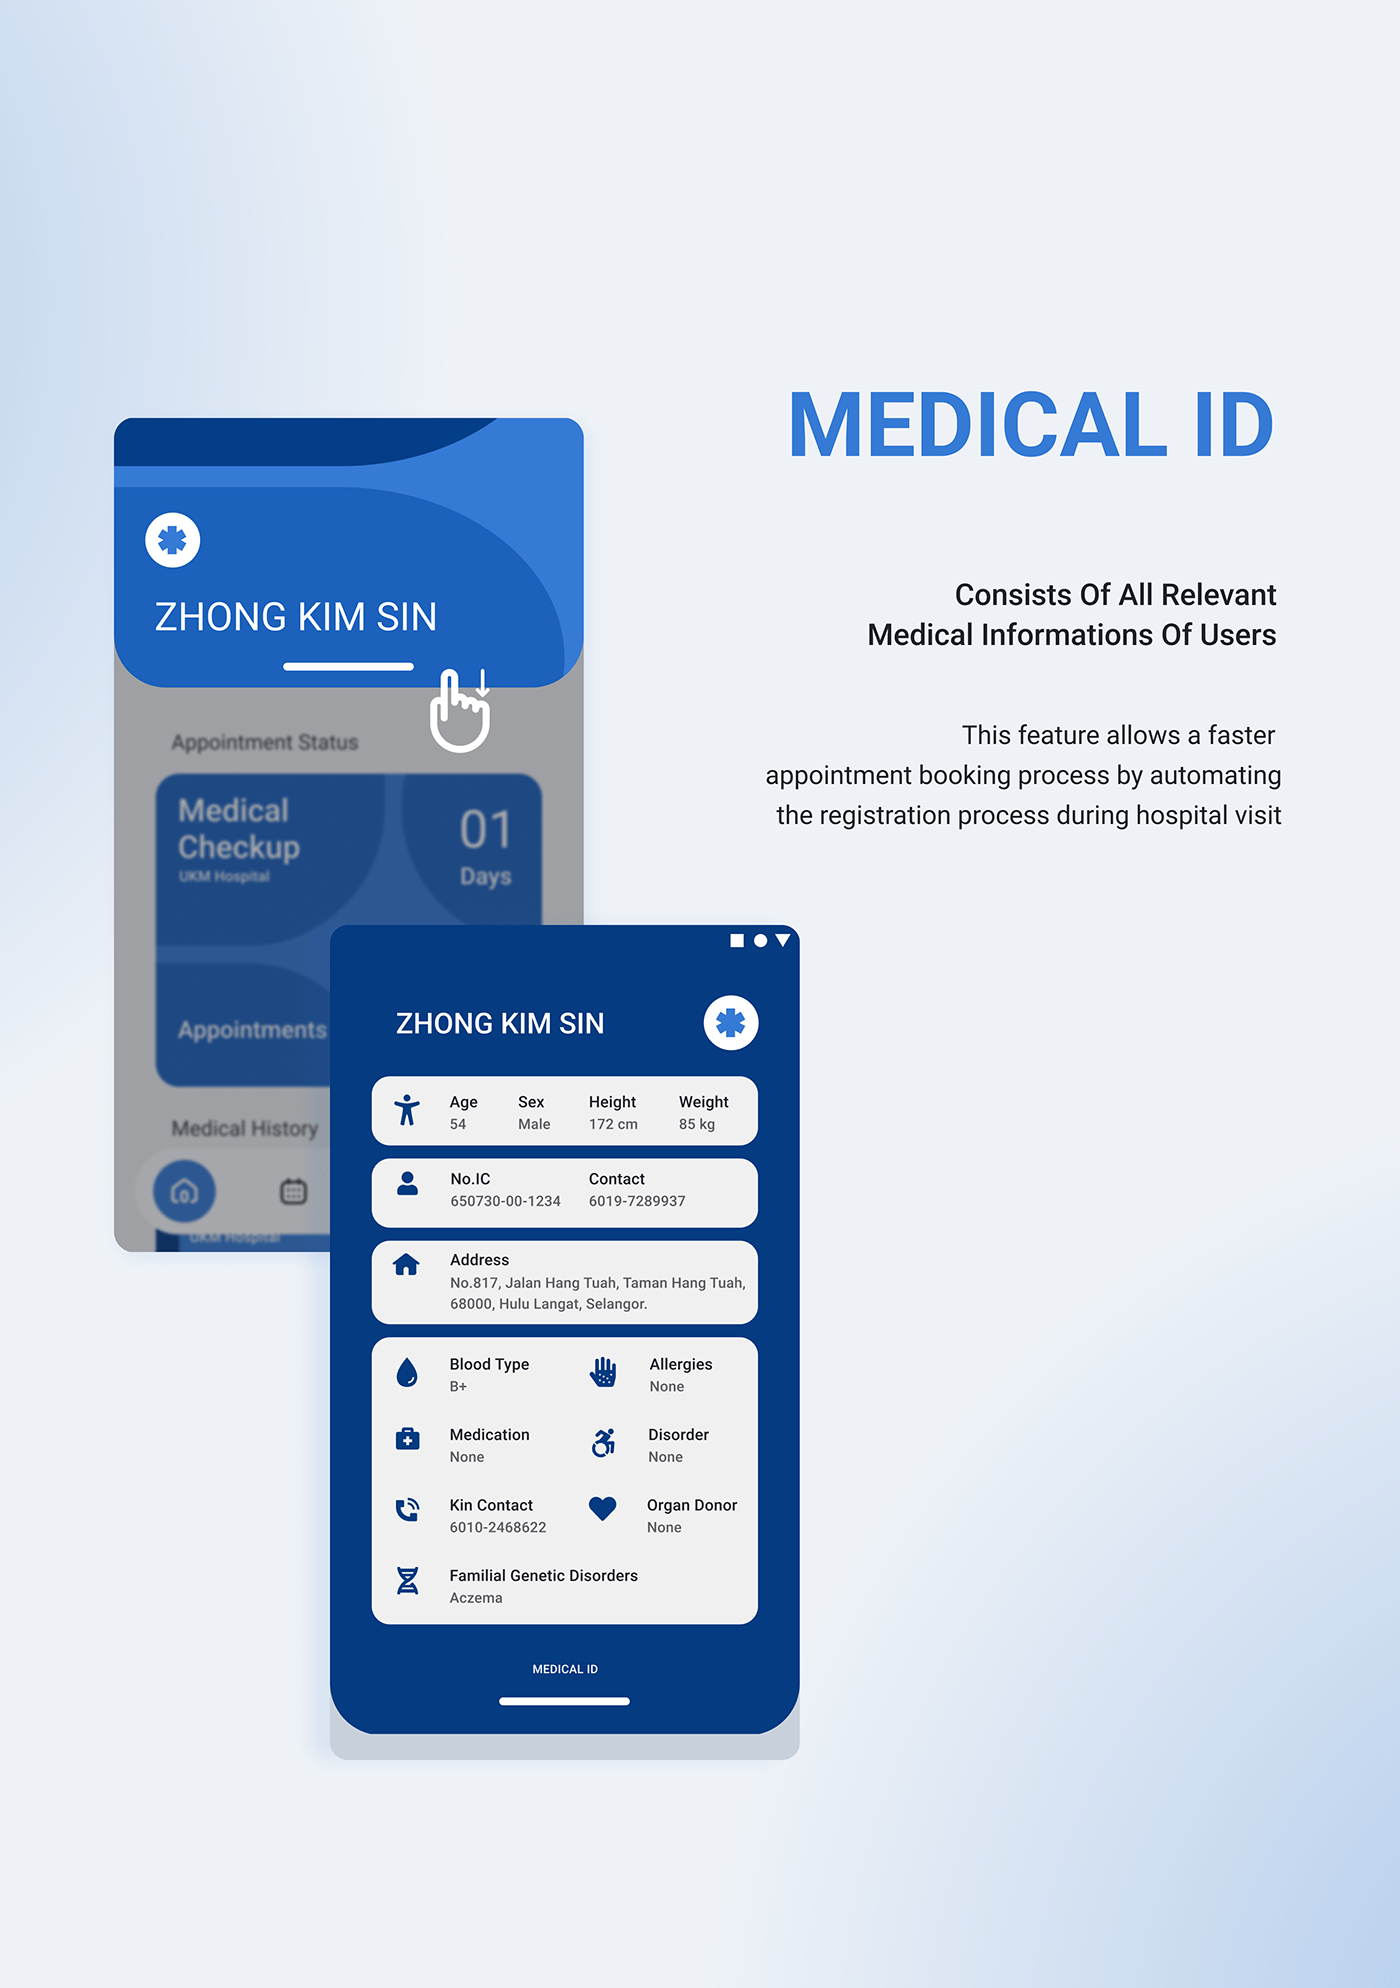 graduation project hospital interactive board game medic medical multimedia design Queue System Signage board uiux user interface